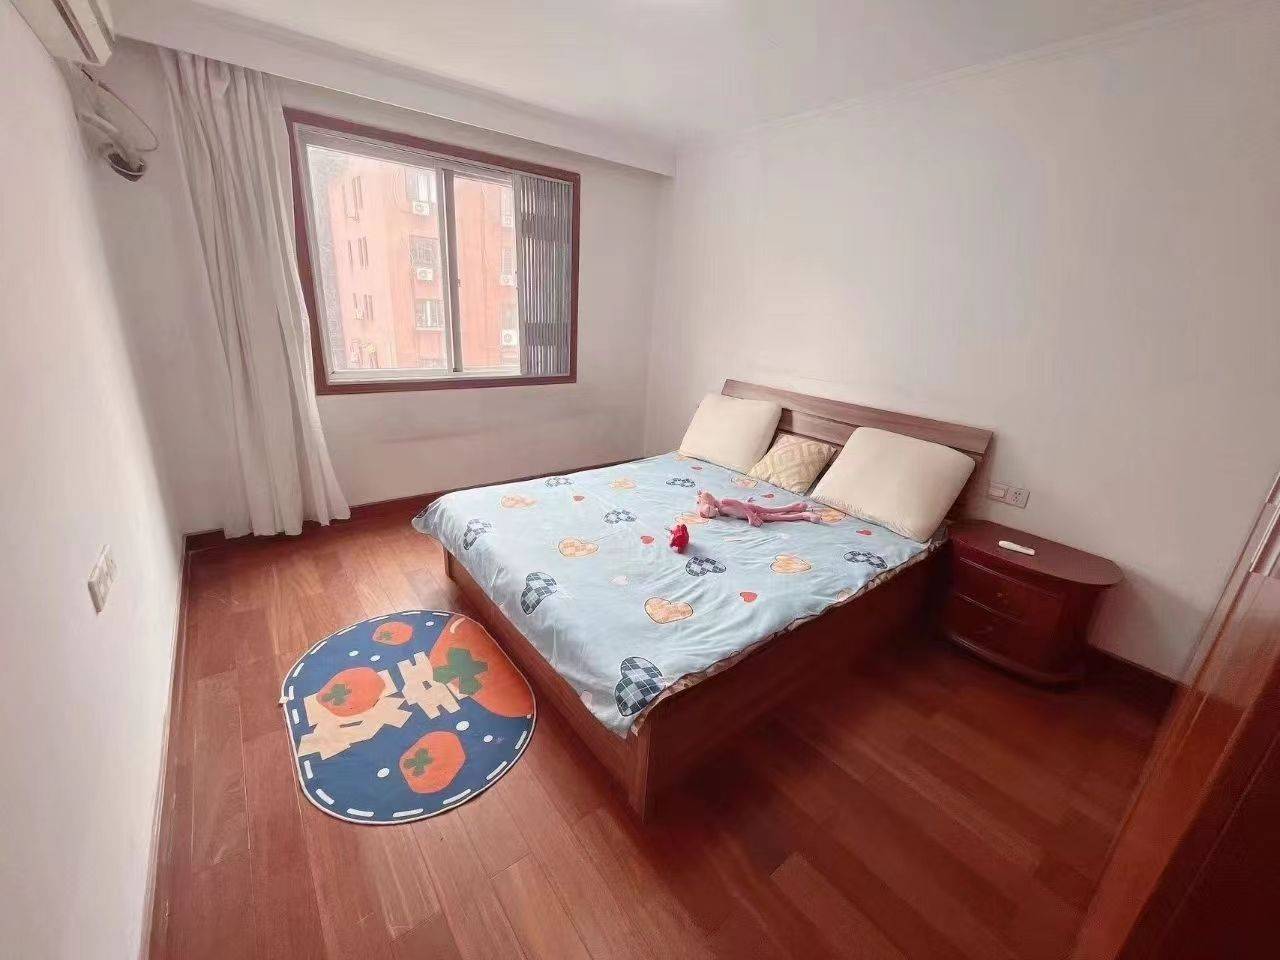 Ningbo-Yinzhou-Cozy Home,Clean&Comfy,No Gender Limit,“Friends”,Chilled,LGBTQ Friendly,Pet Friendly